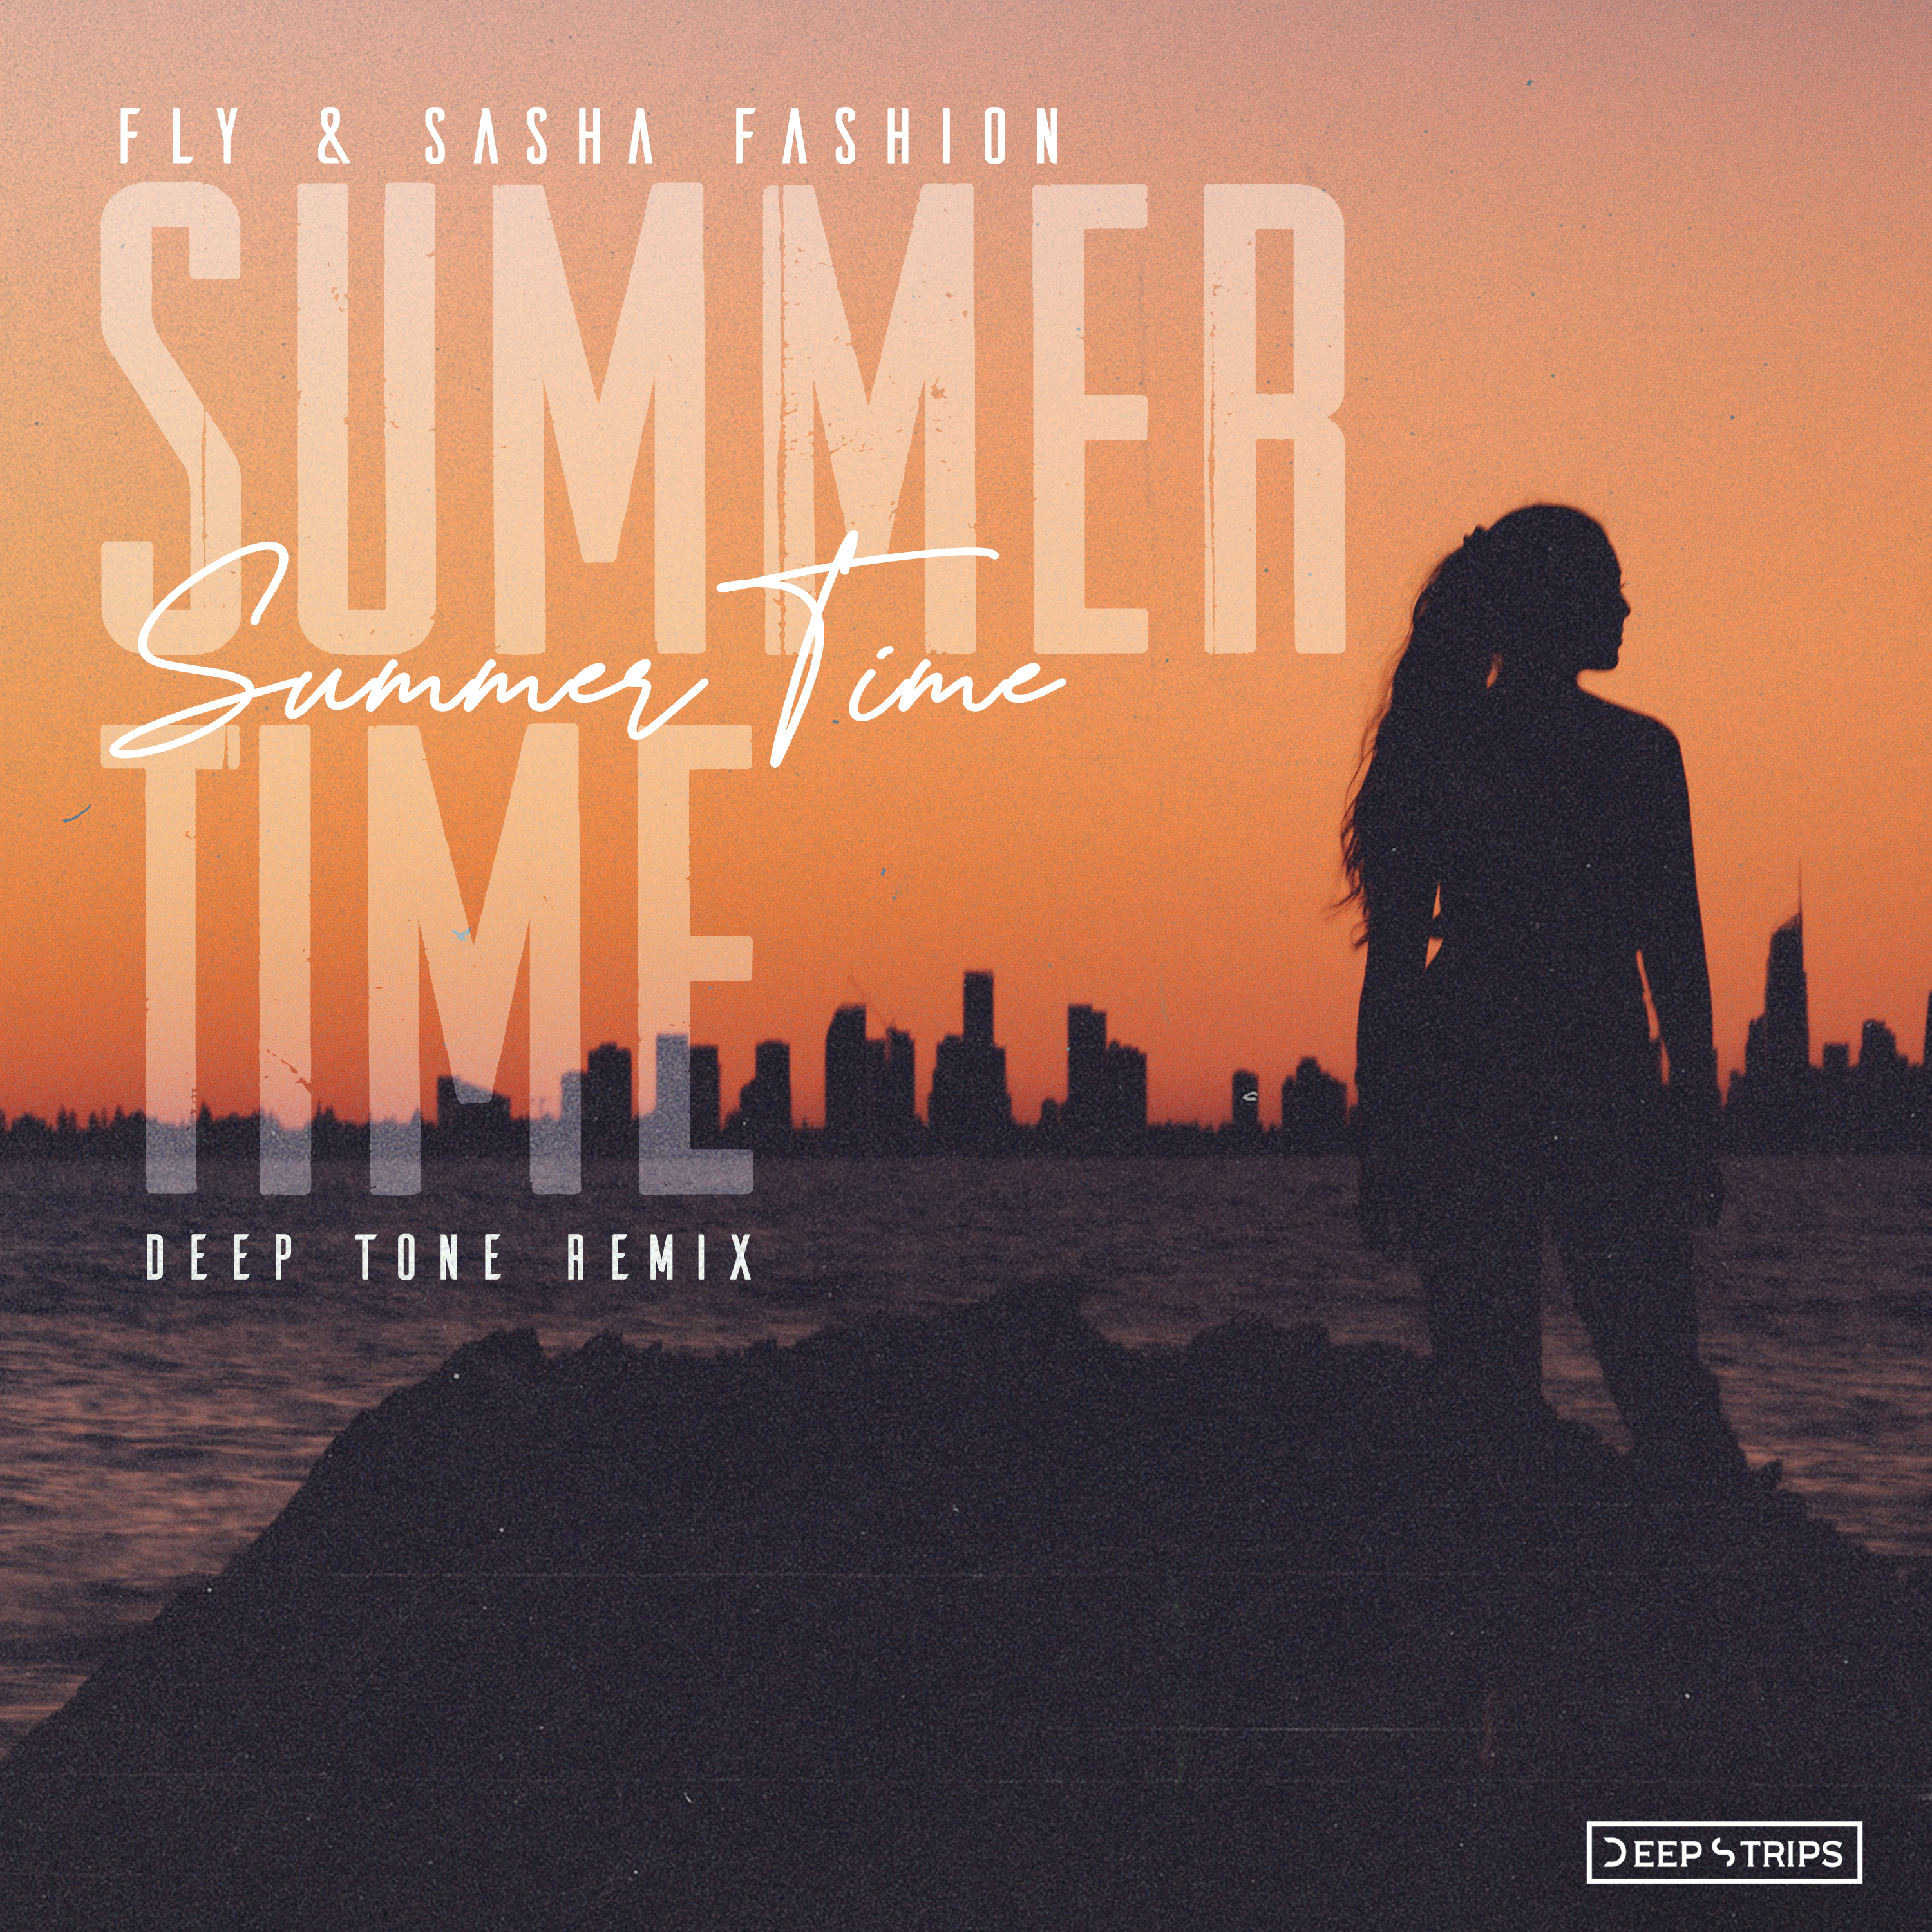 Fly Sasha Fashion. Summertime минус. Fly & Sasha Fashion - Summer time (Original Mix). Summertime перевод. Tone remix